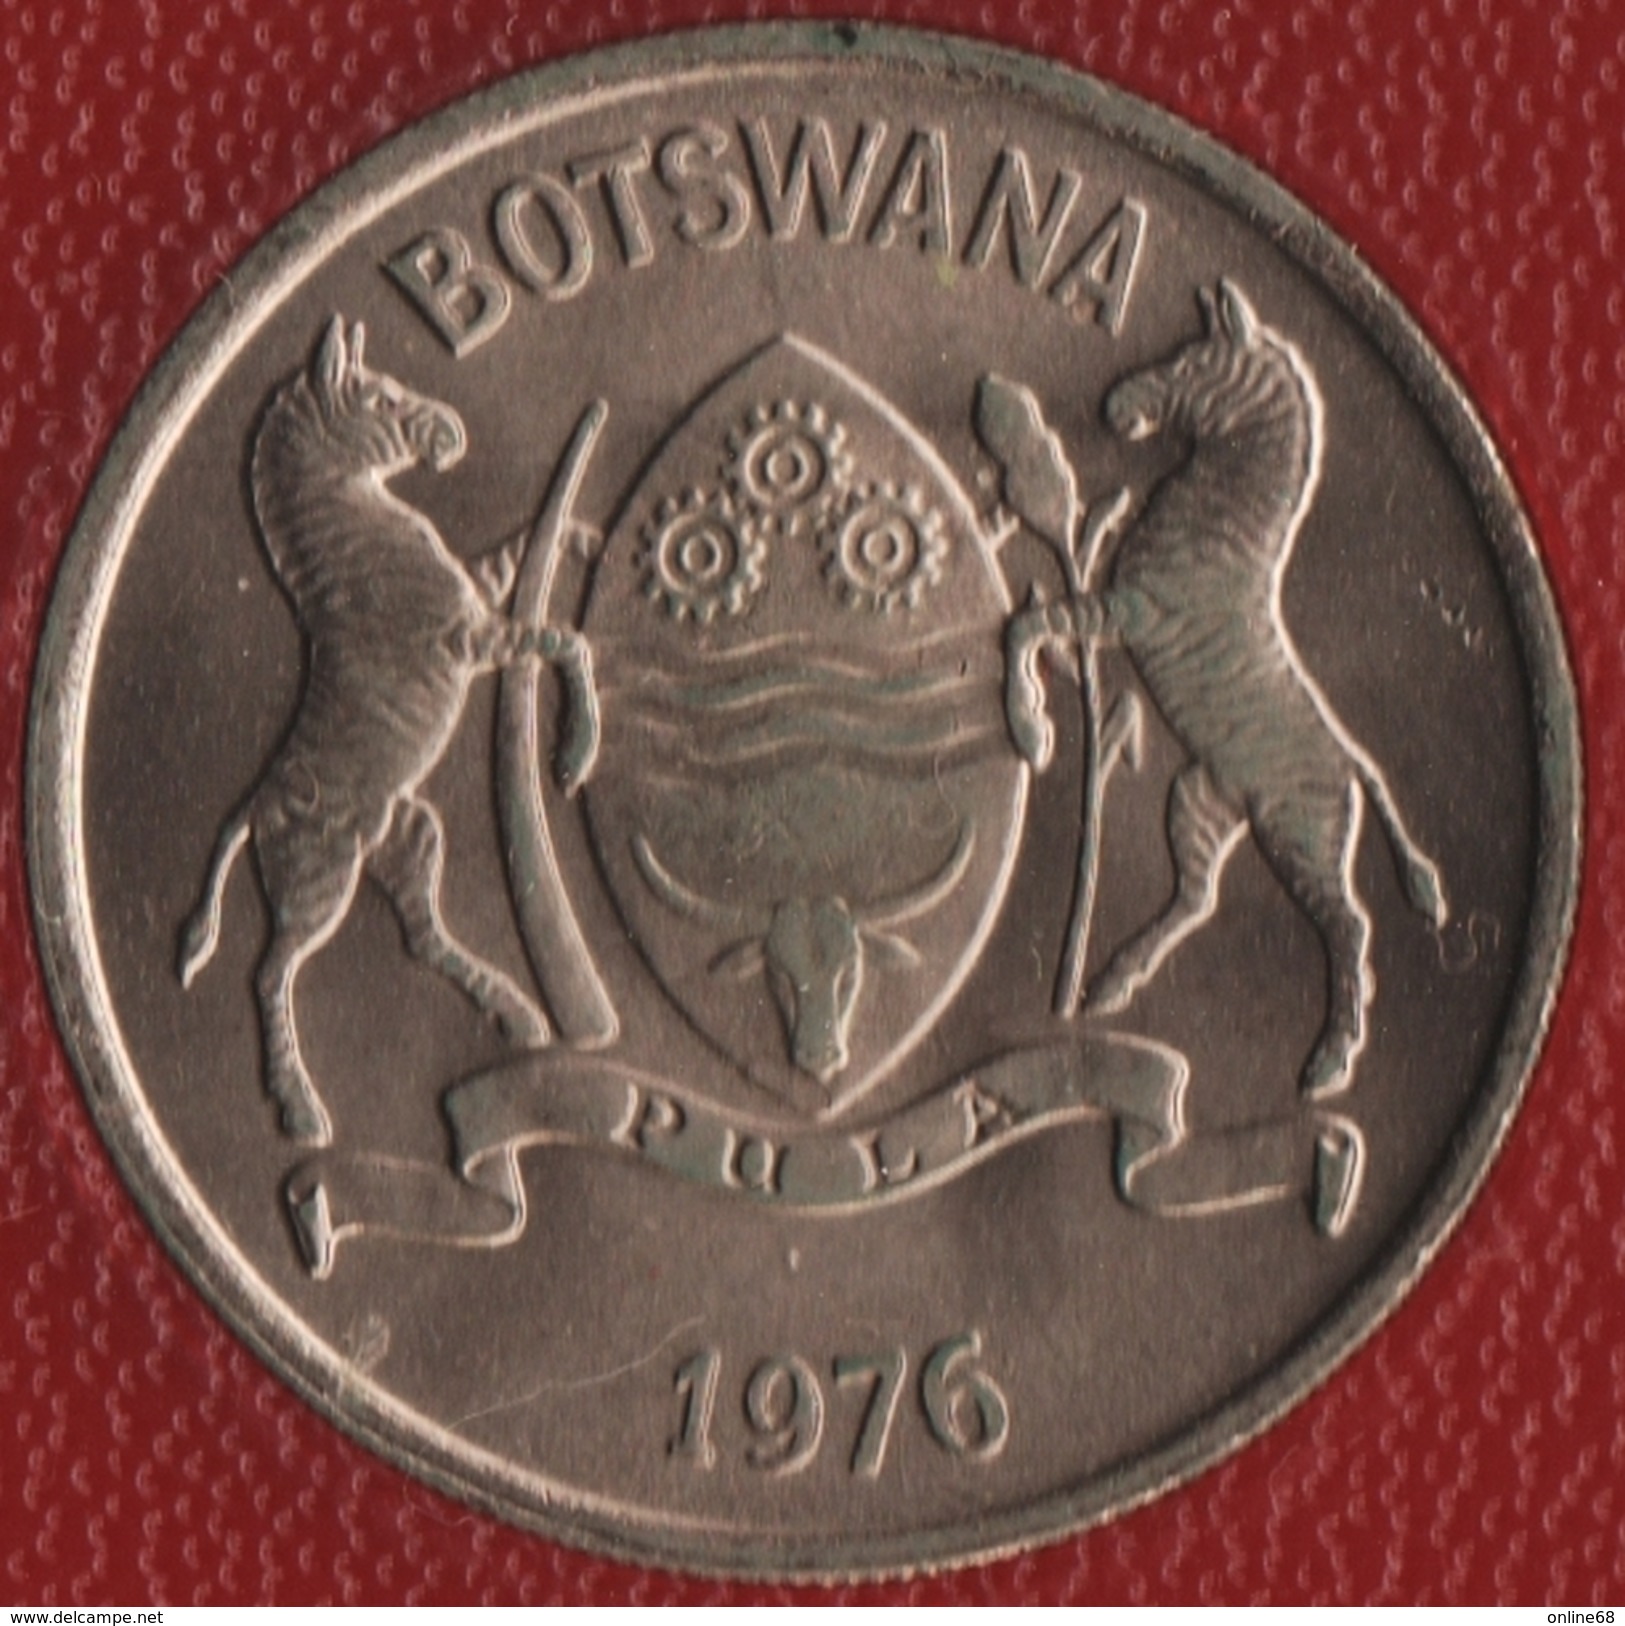 BOTSWANA 25 THEBE 1976 Zébu KM# 6 - Botswana